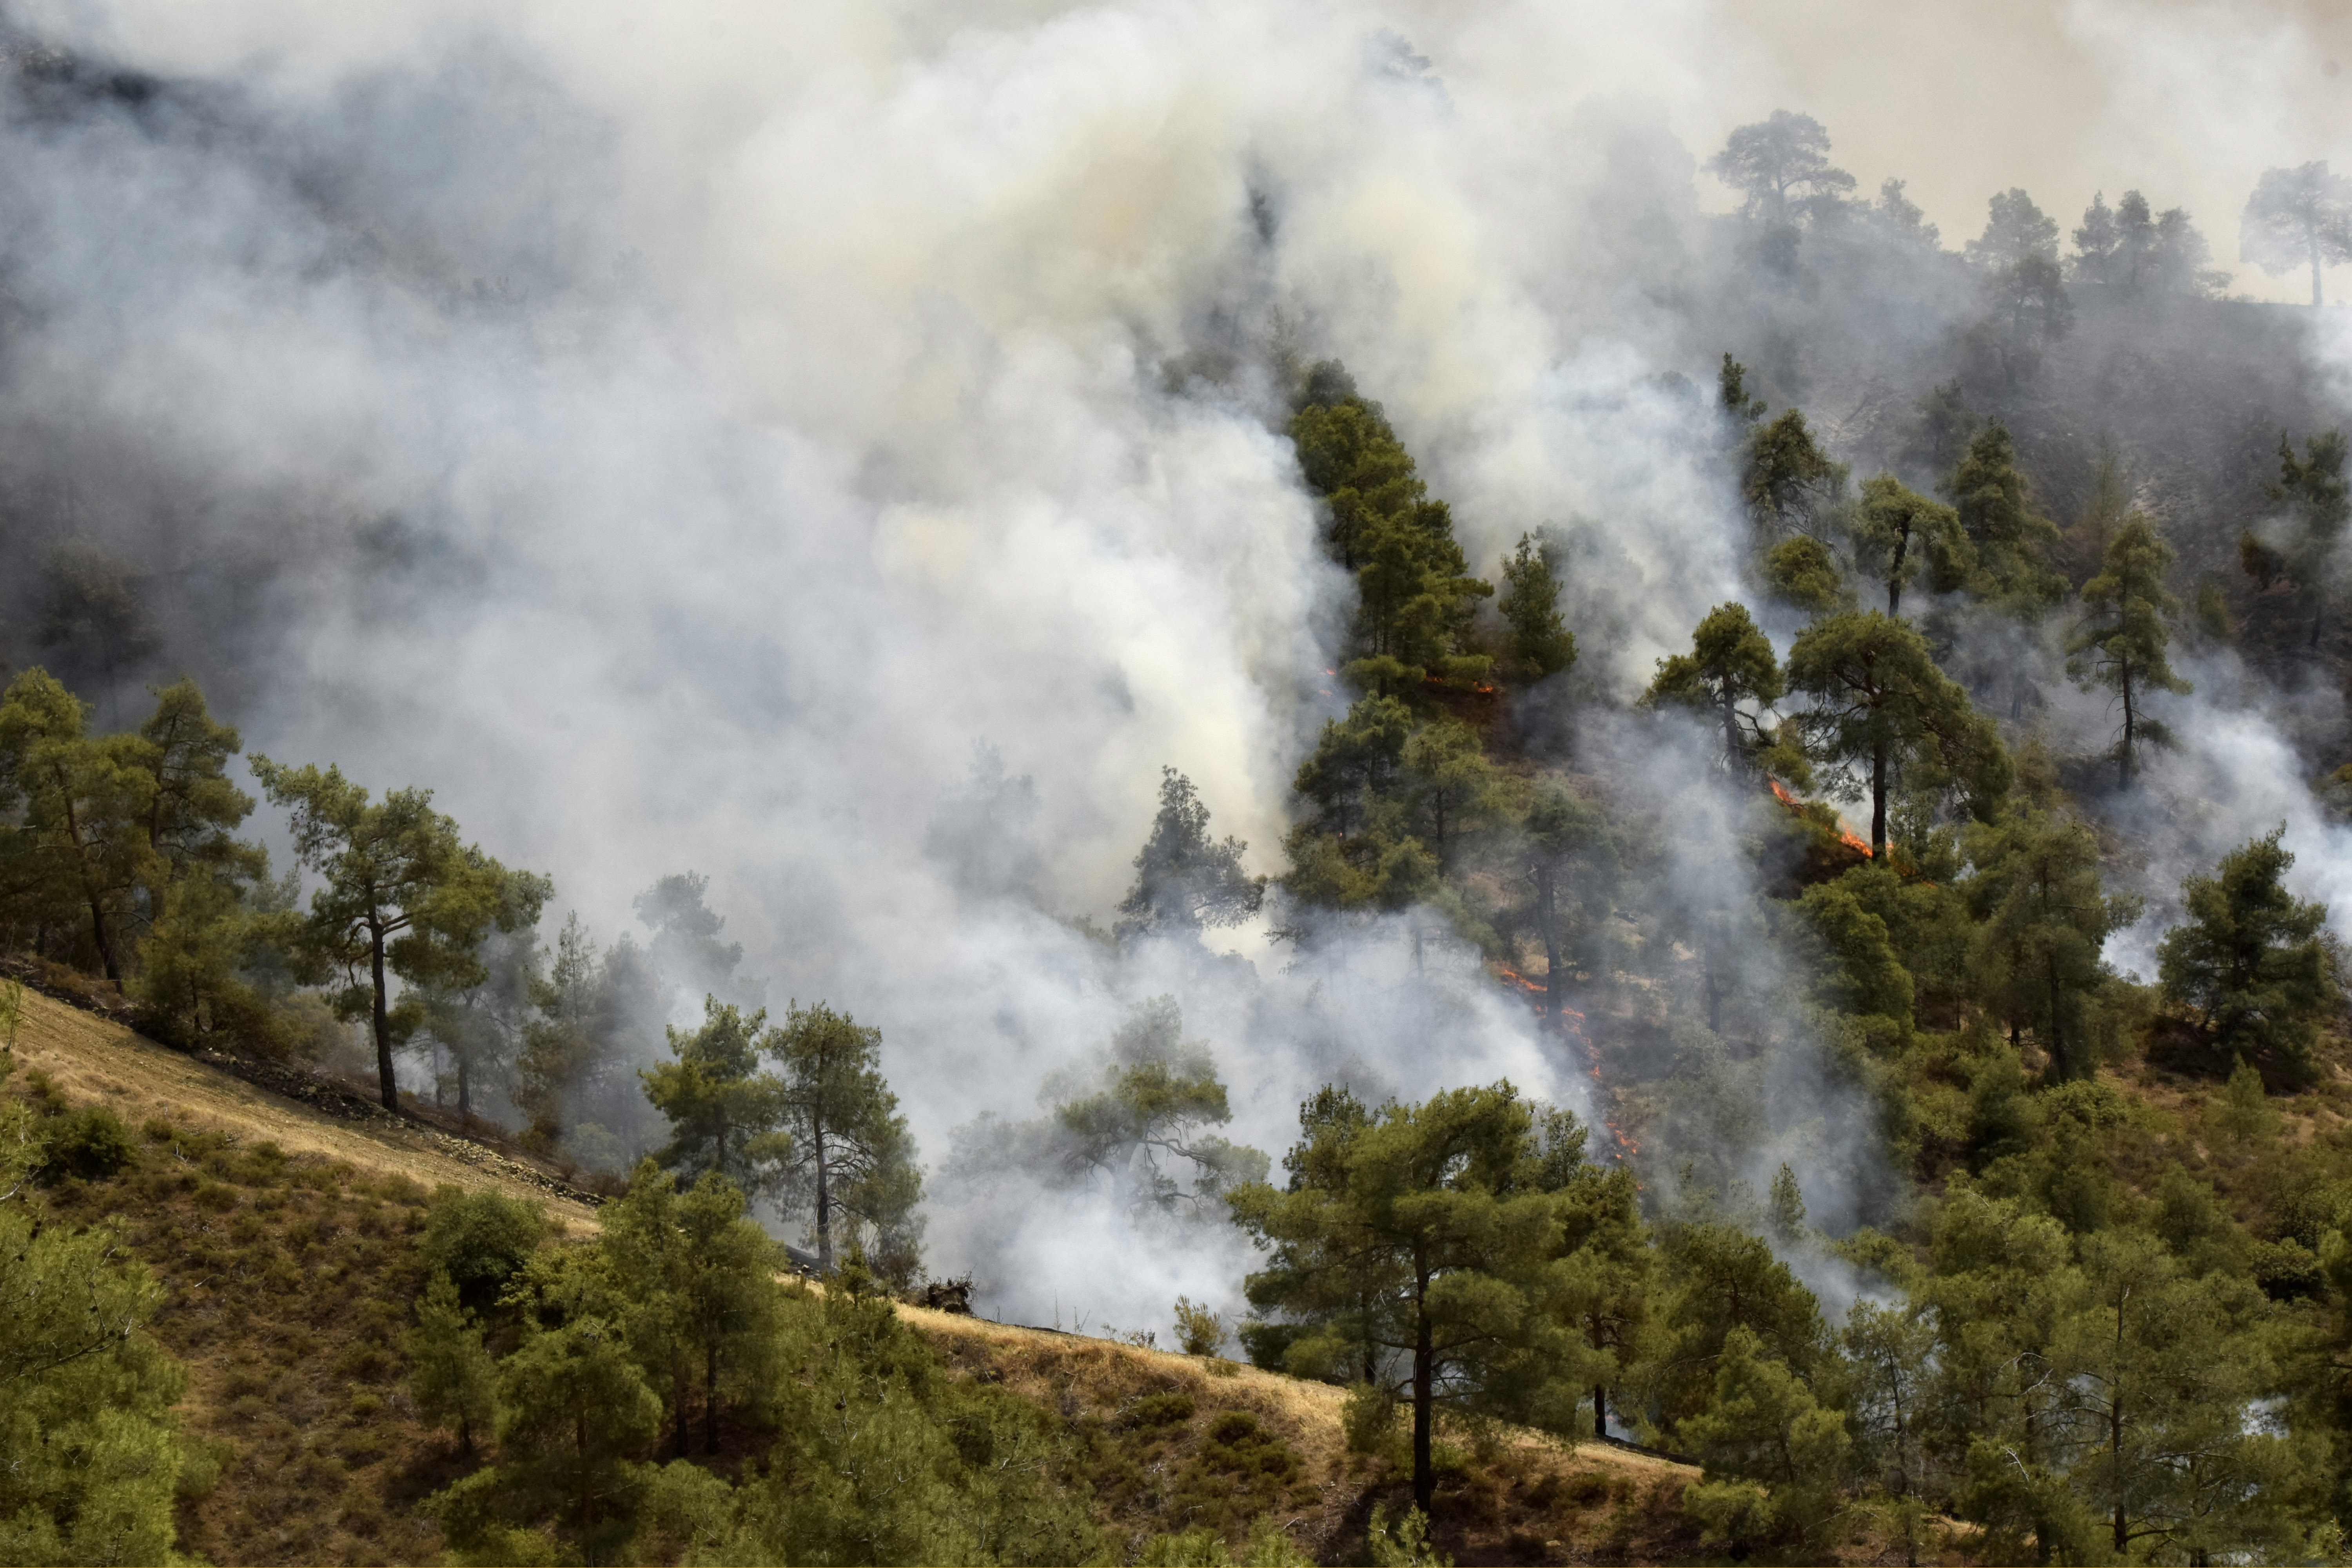 Firefighters killed tackling huge Cyprus forest blaze